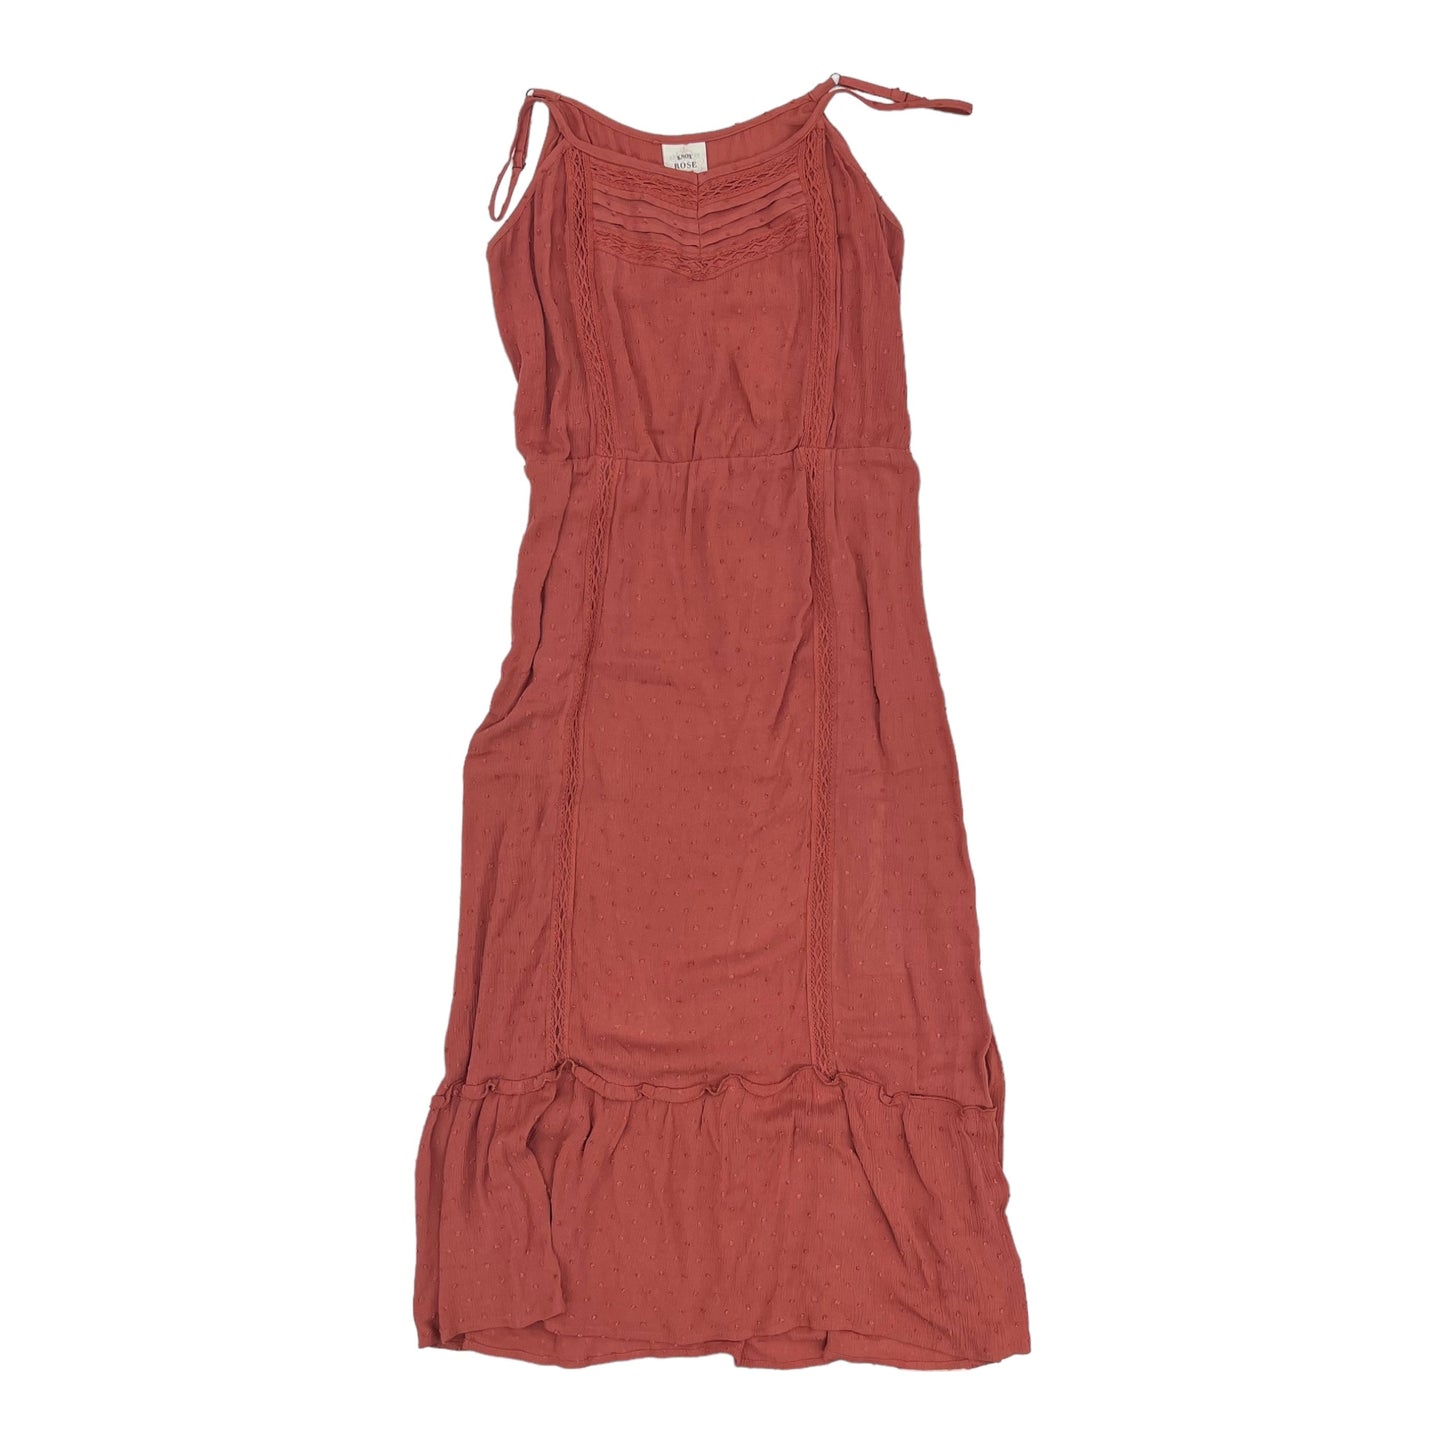 ORANGE KNOX ROSE DRESS CASUAL MAXI, Size L